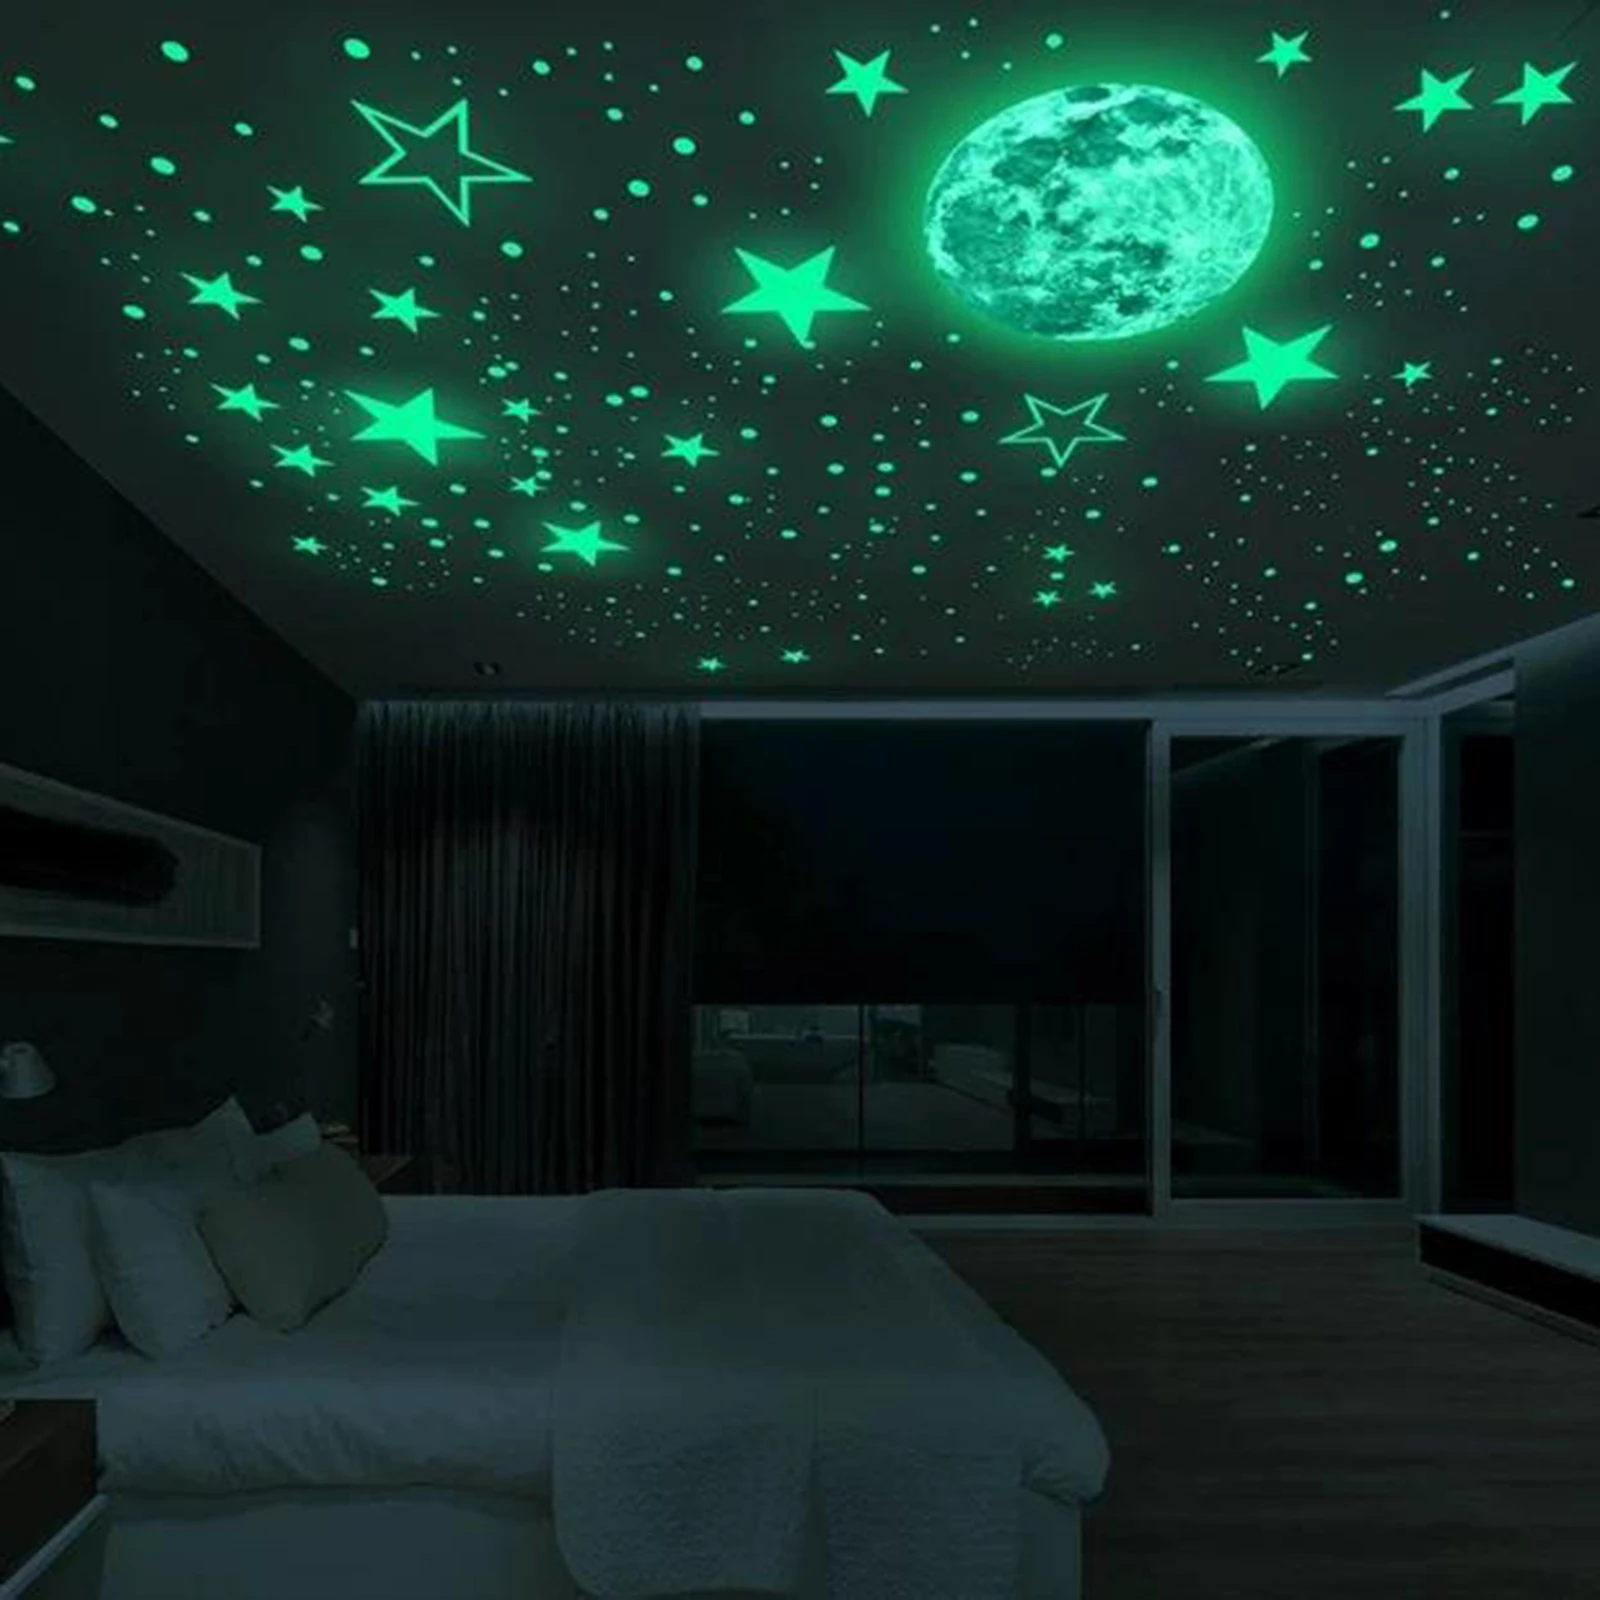 435pcs Glow In The Dark Stars Planets Wall Stickers Decal Luminous Kids Room